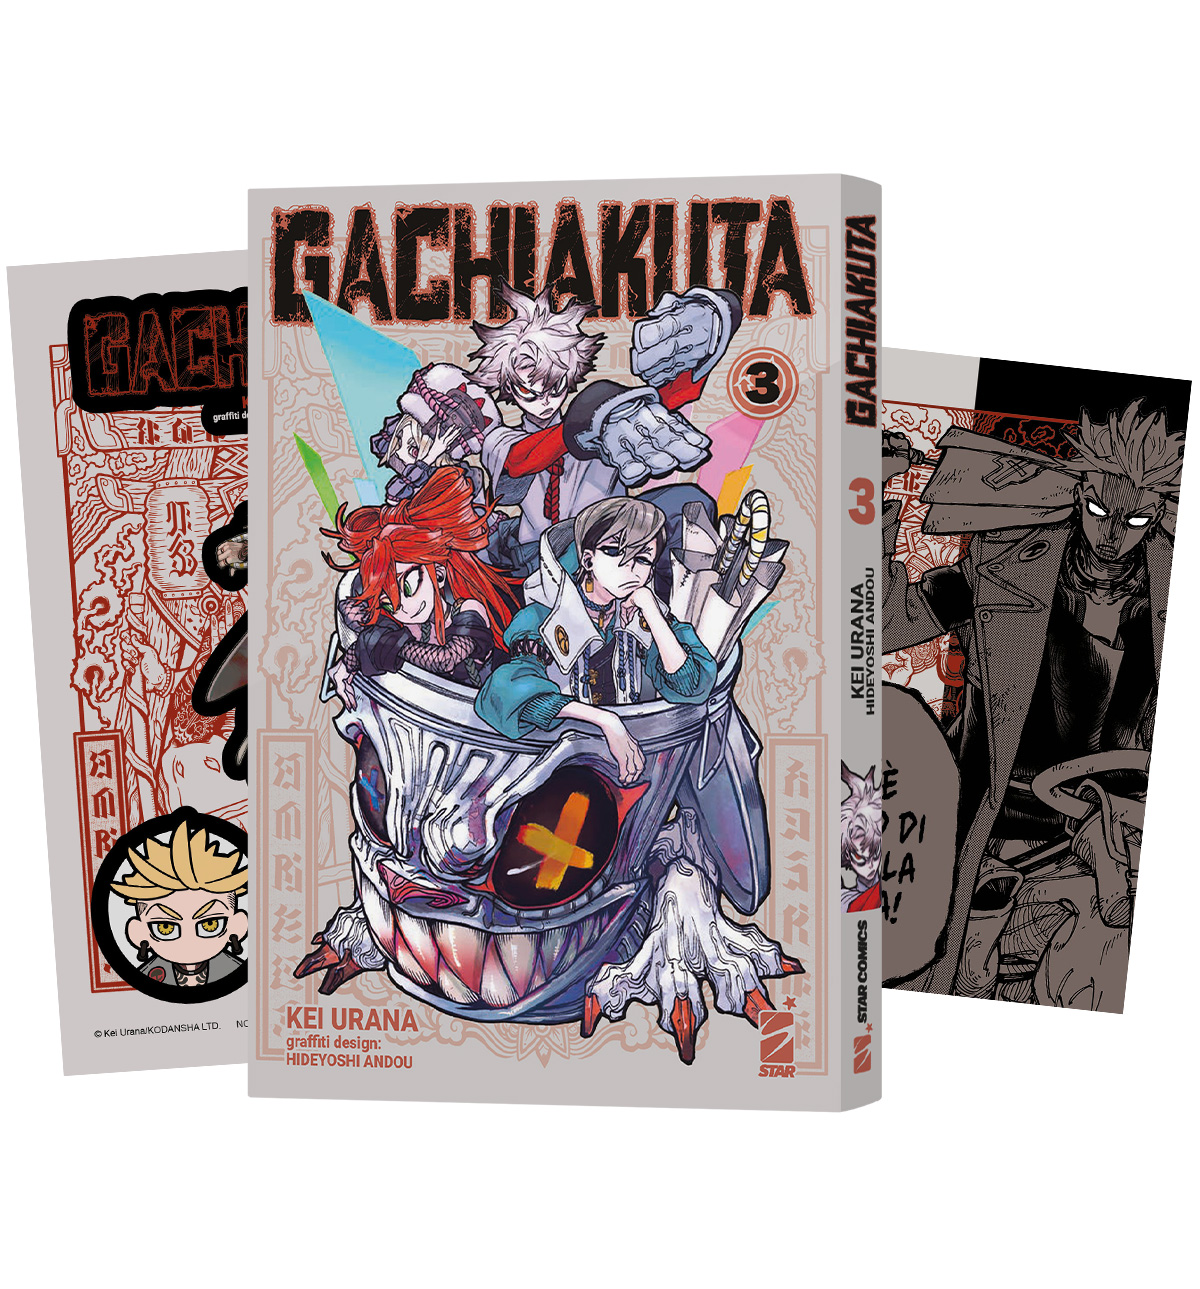 Manga – Star Comics – Gachiakuta #3 Variant